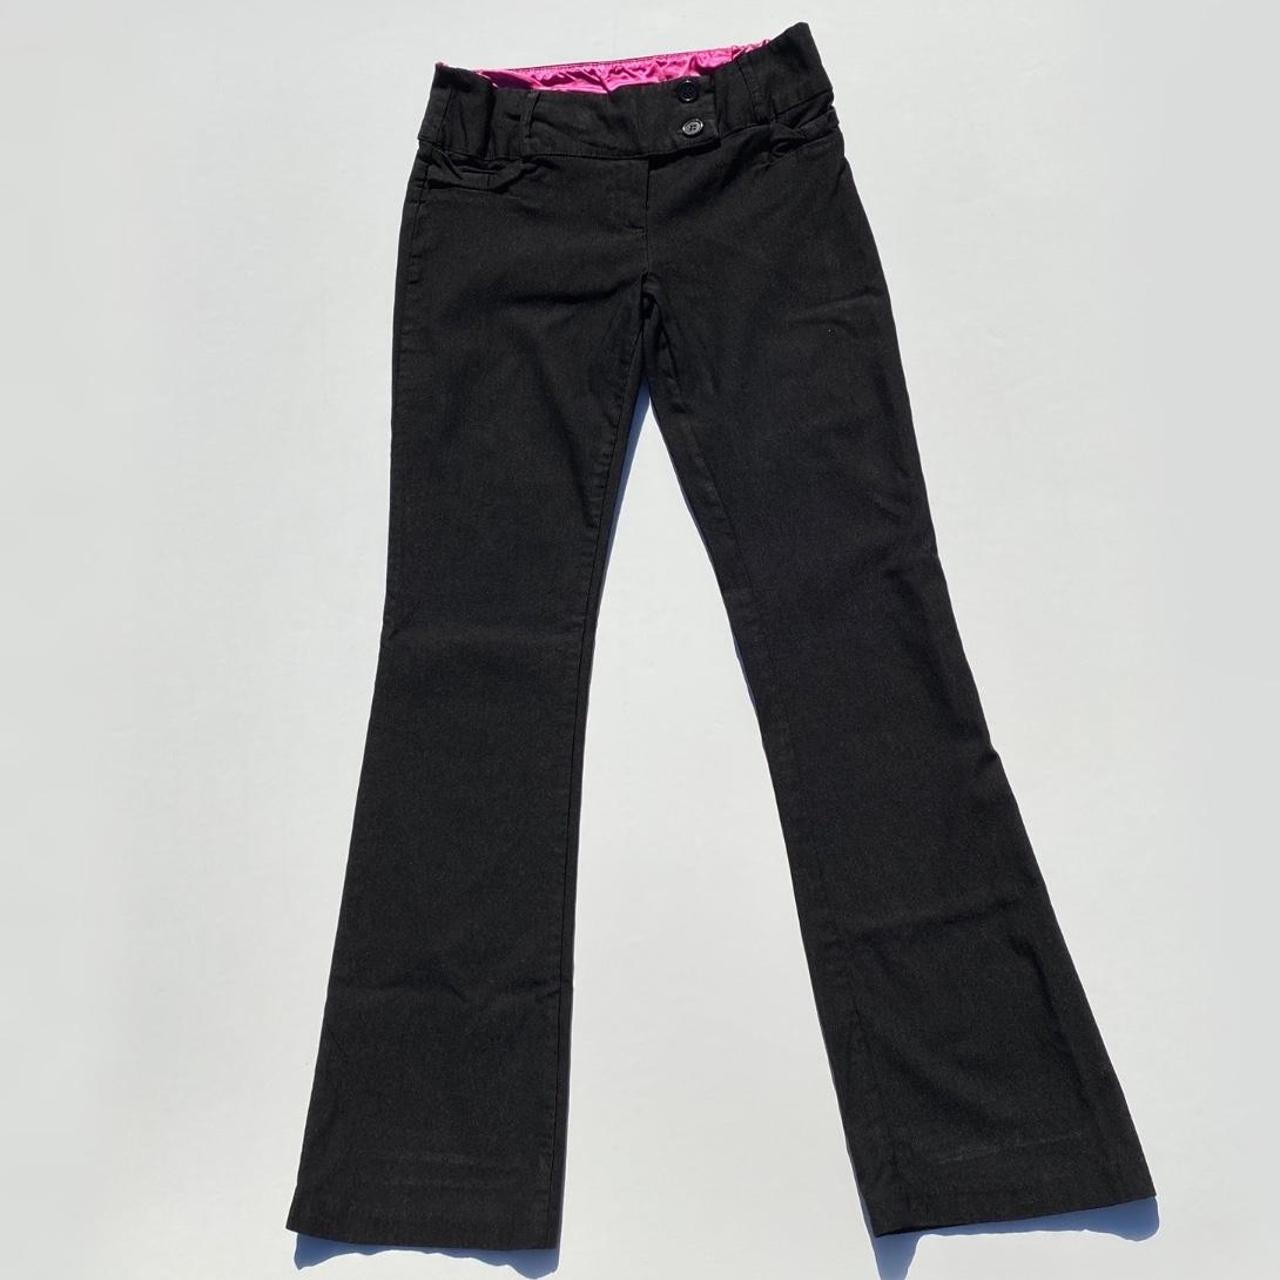 Vintage black flare dress pants with pink waistband - Depop